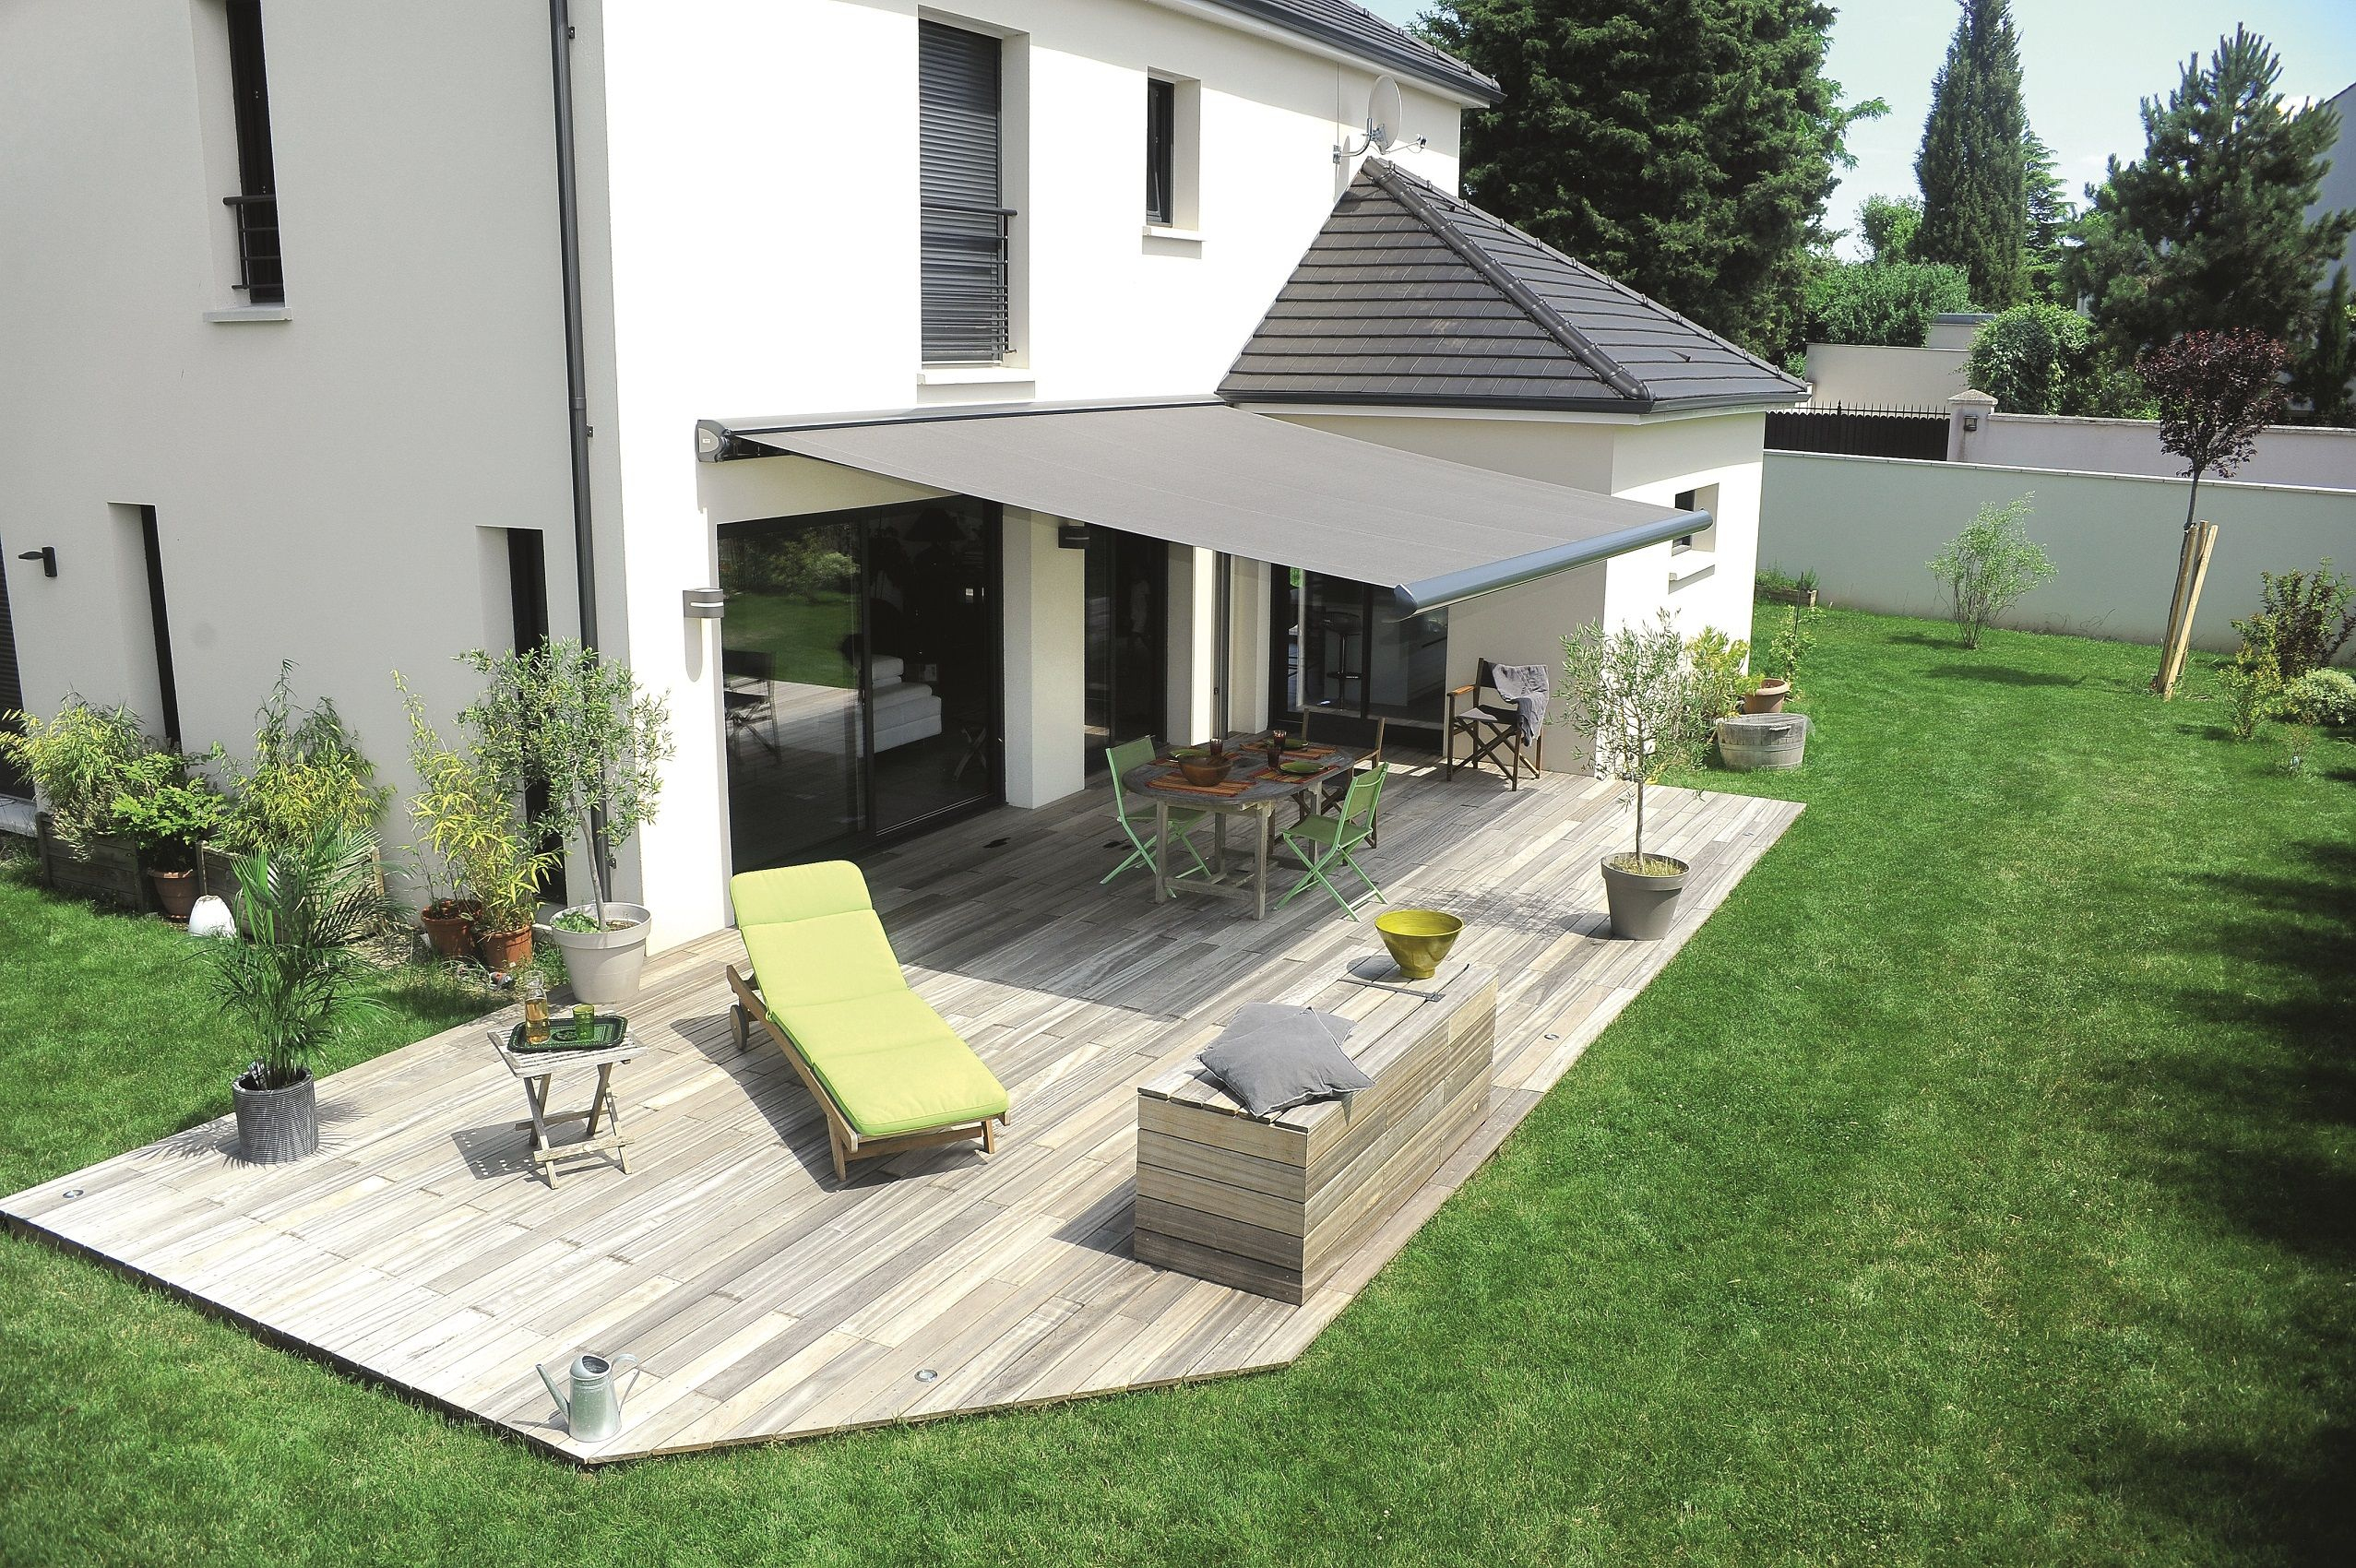 Storistesdefrance #store #terrasse #jardin #soleil ... concernant Jardin Devant Maison Terrasse